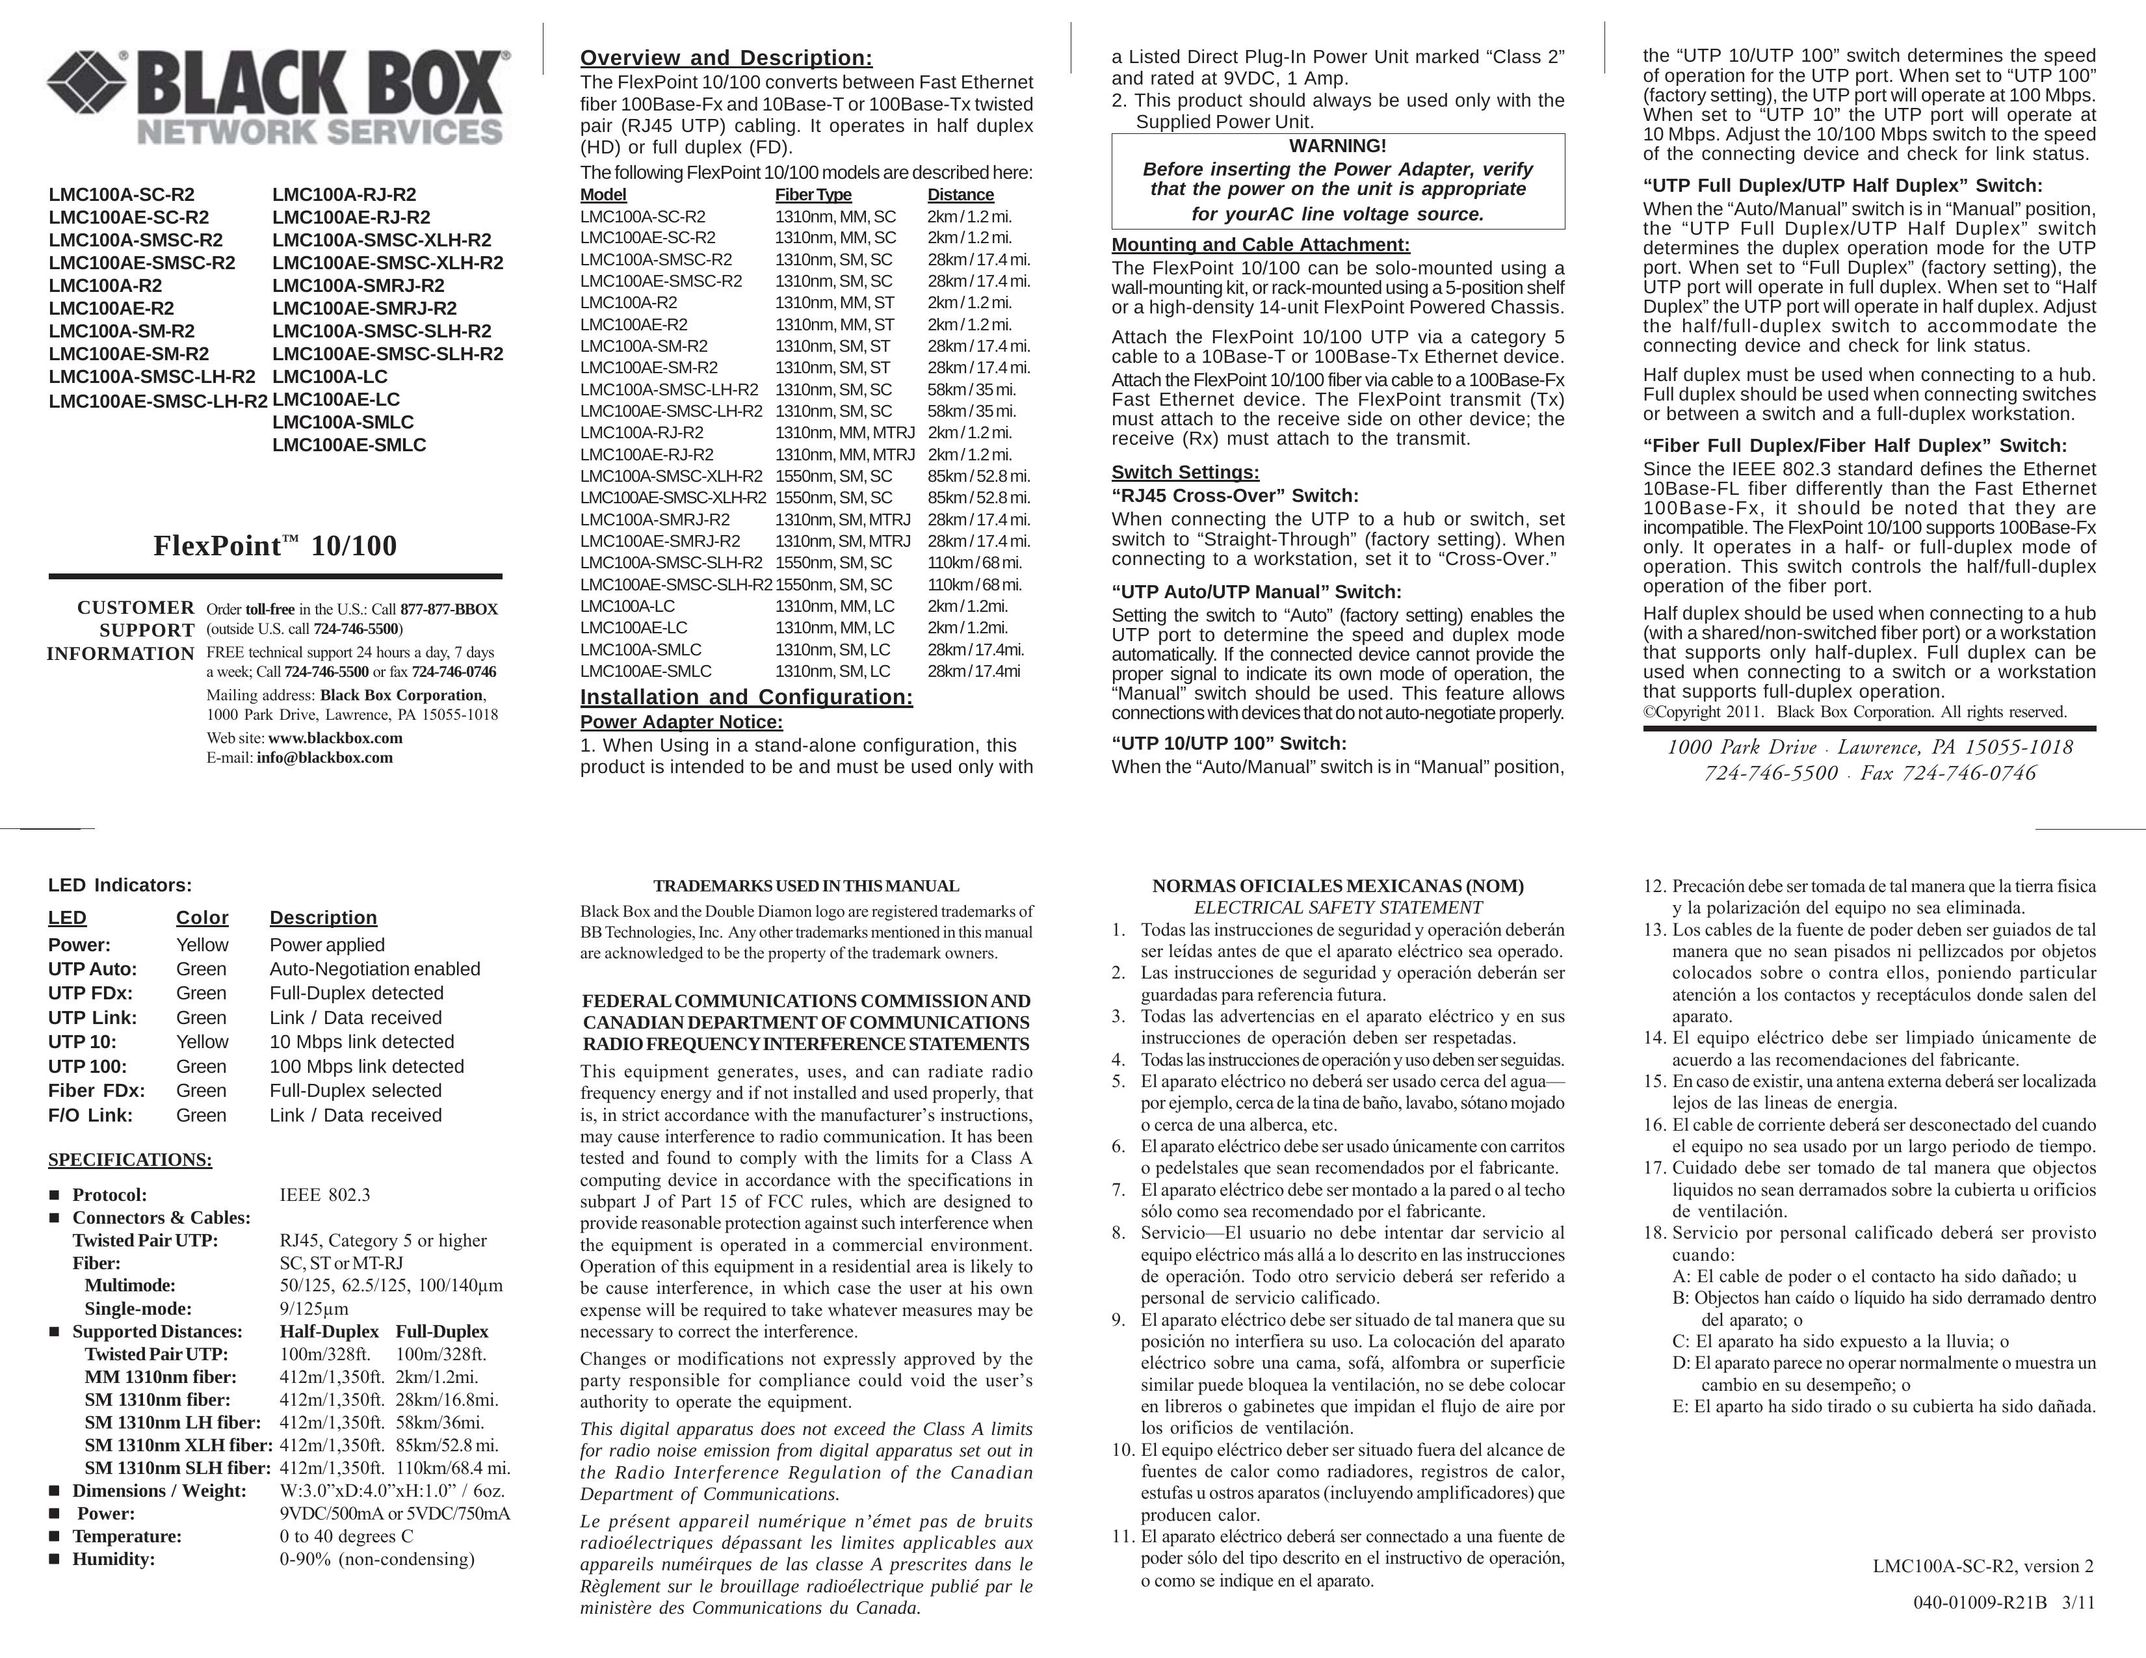 Black Box LMC100AE-LC Network Cables User Manual